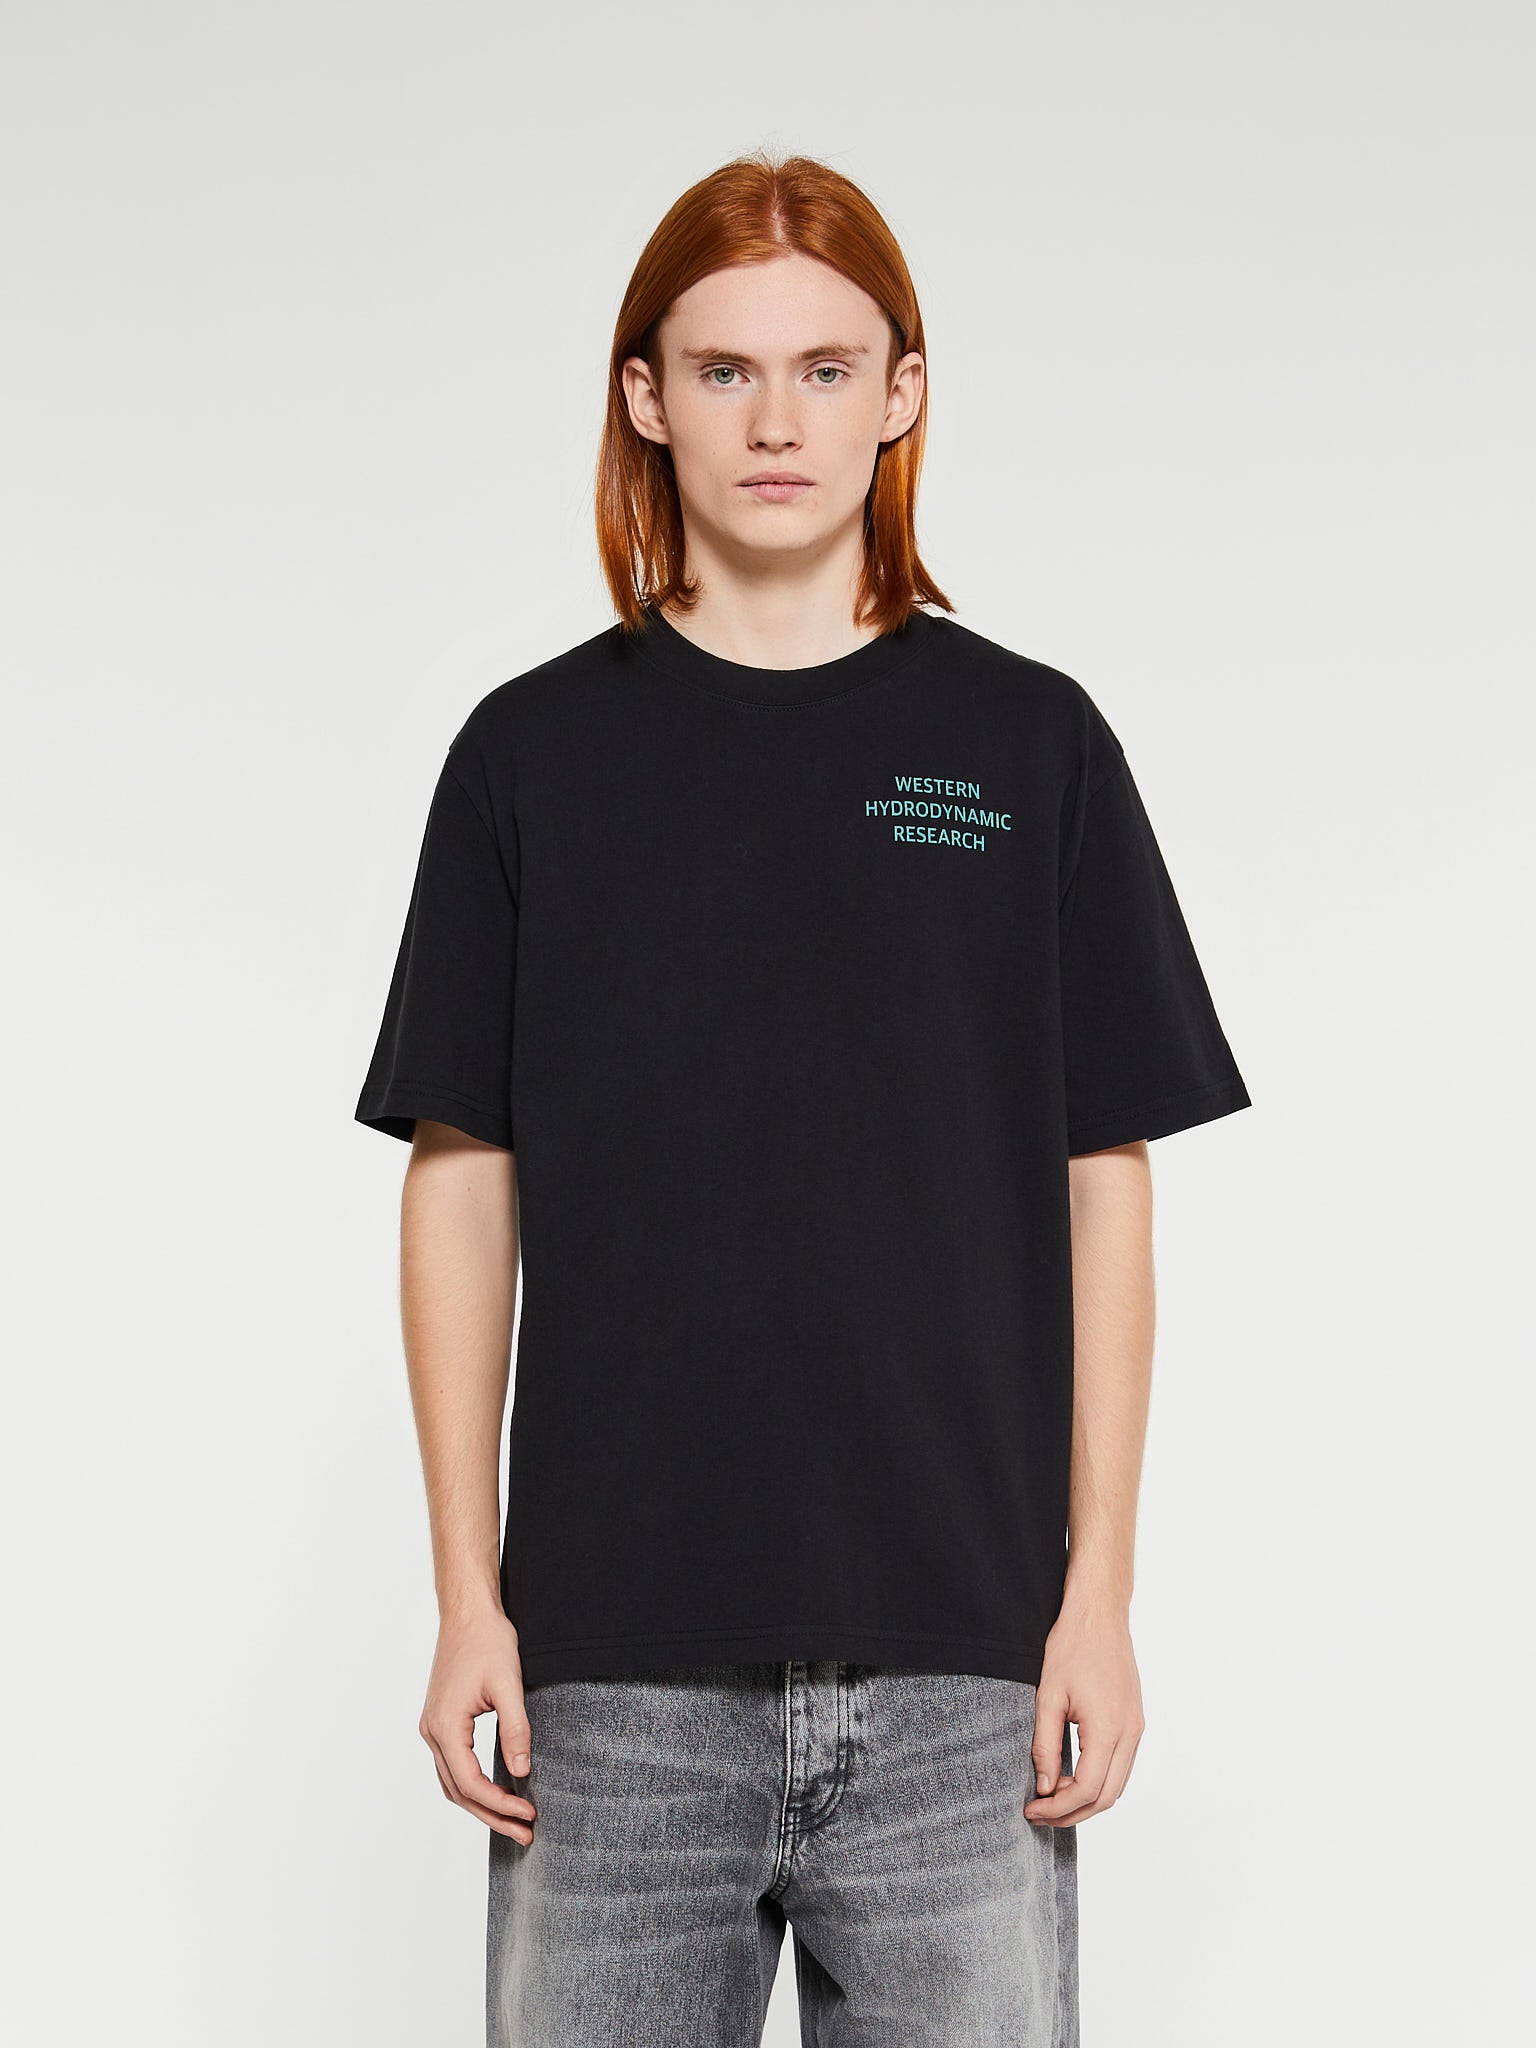 Western Hydrodynamic Research - Worker T-Shirt in Black